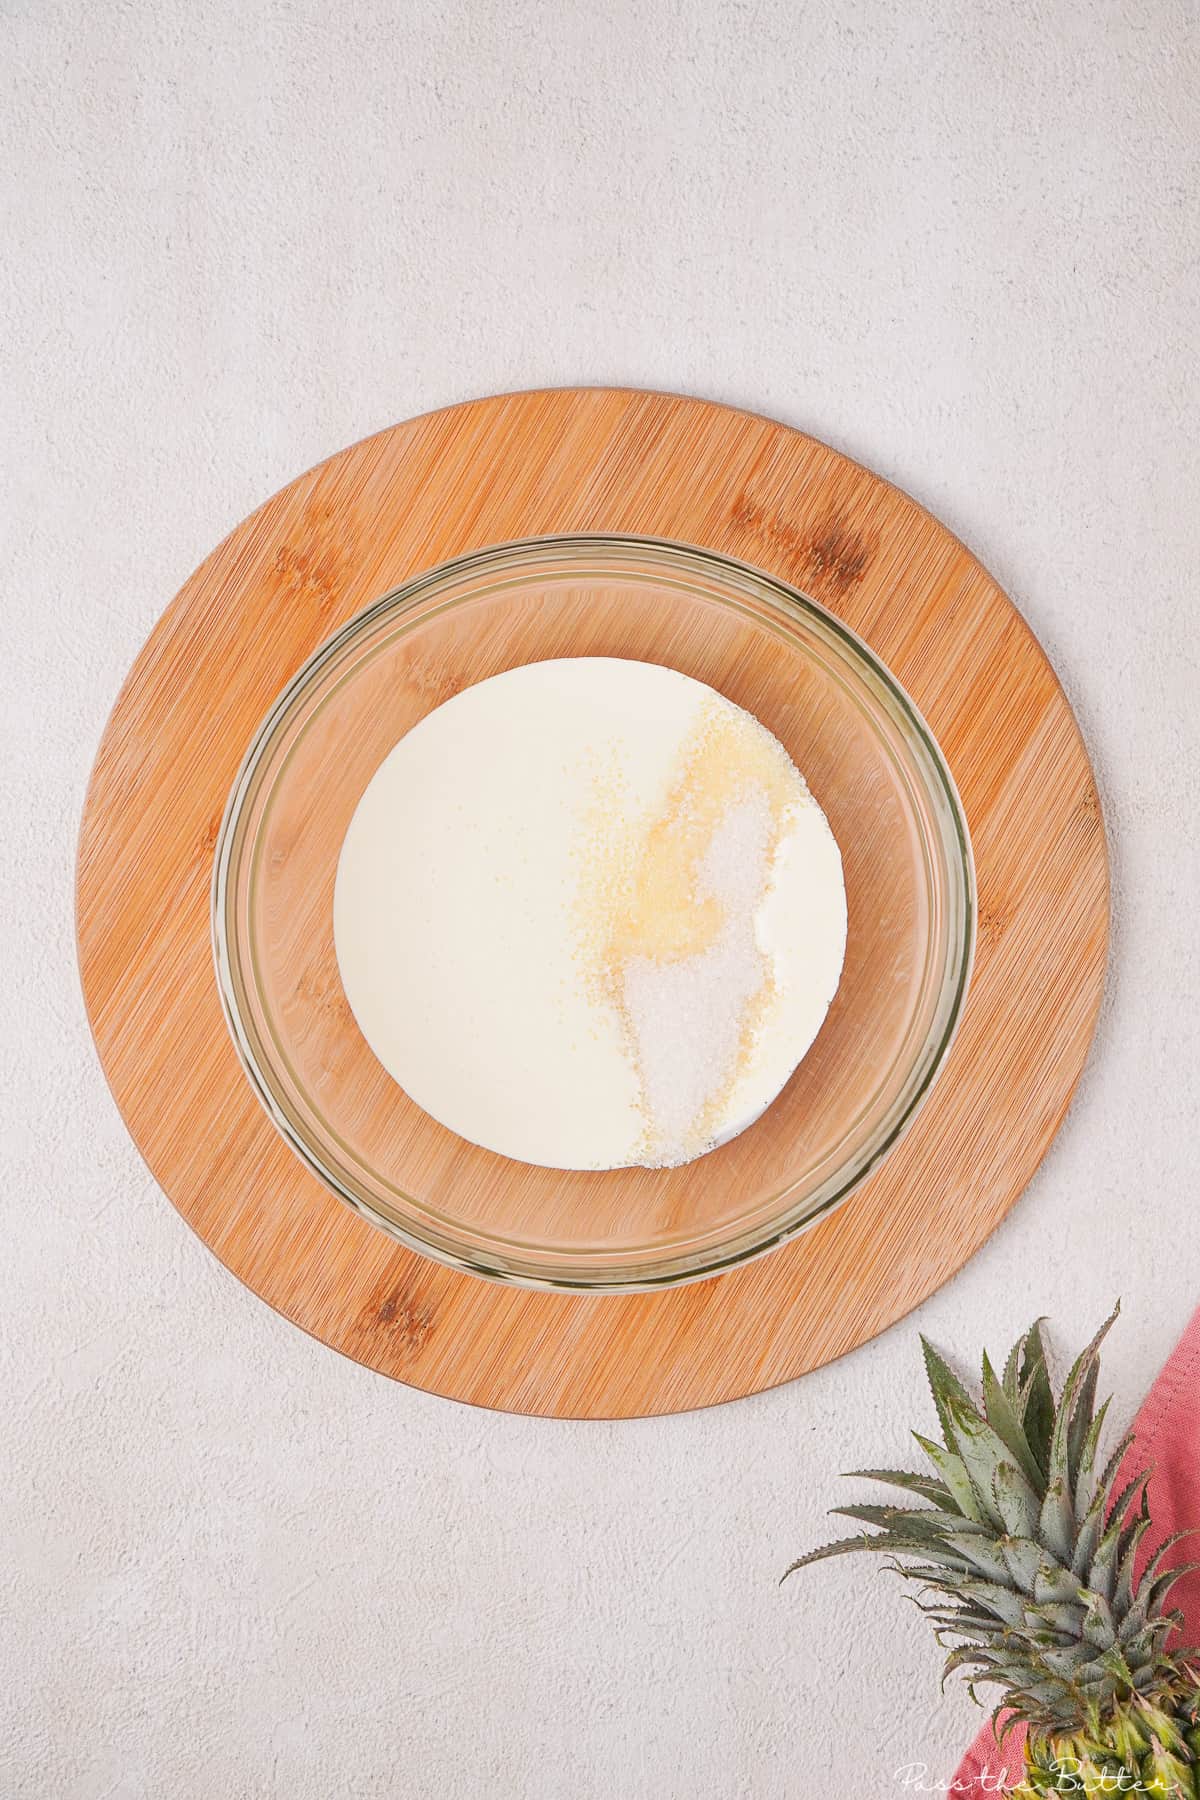 Cream and sugar in a bowl.